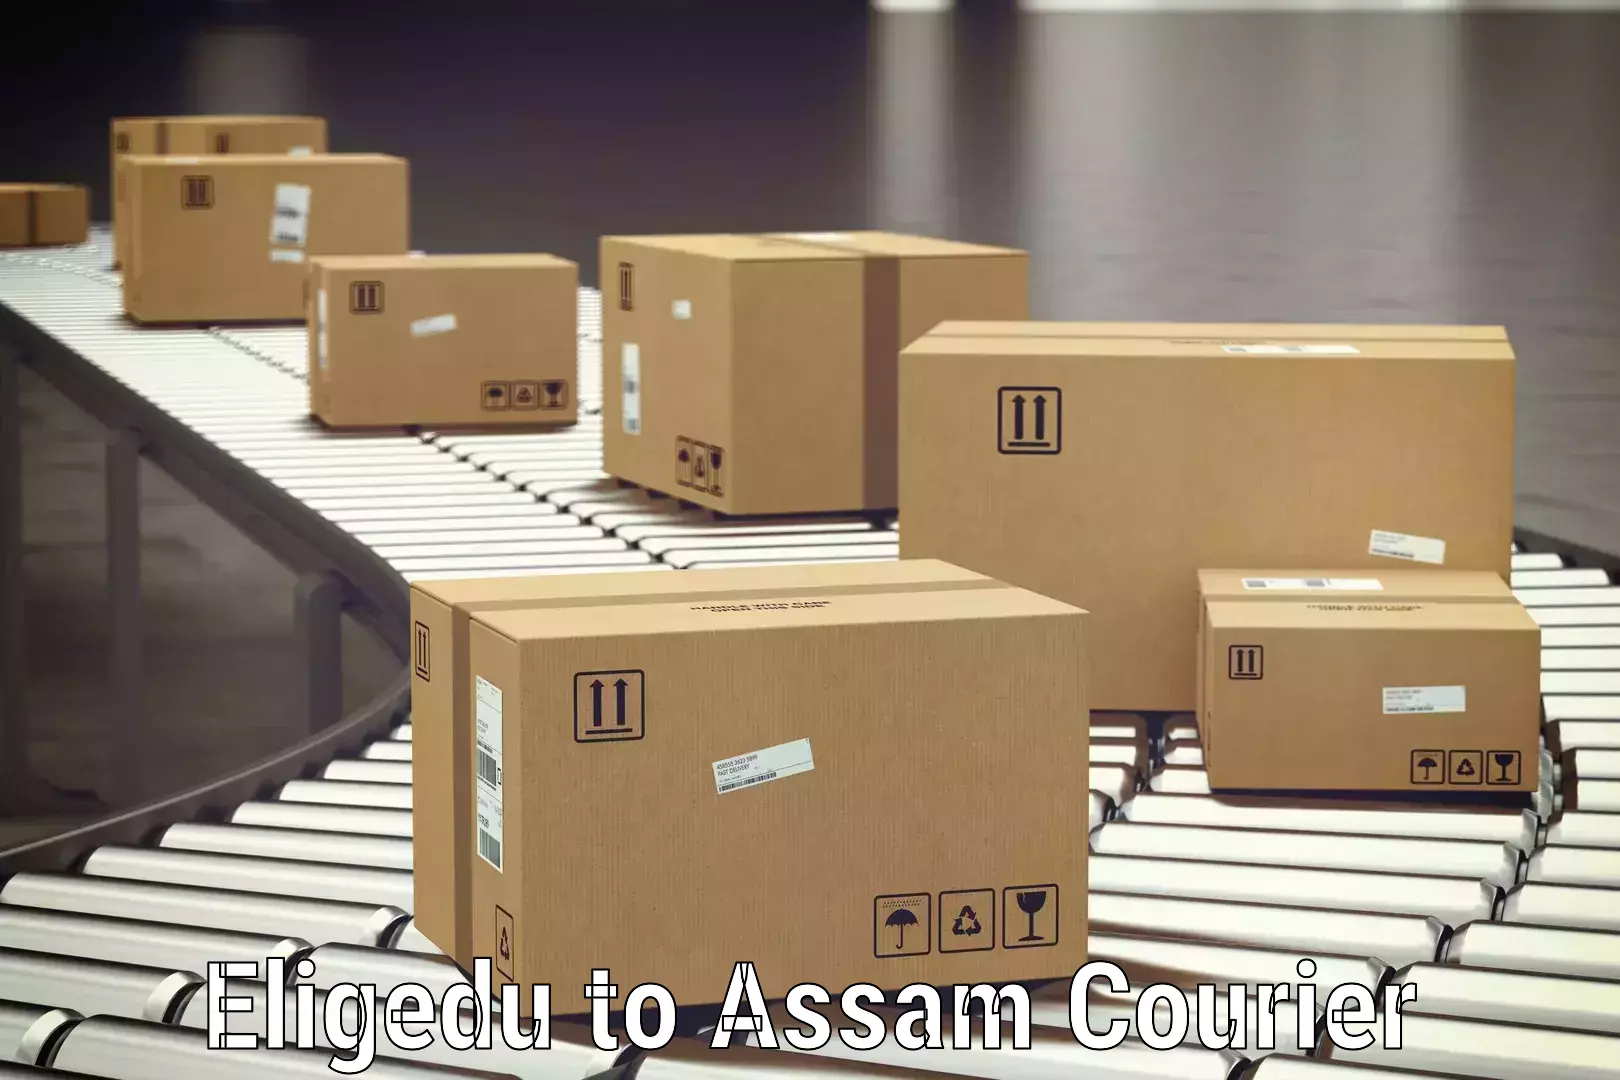 Quick luggage shipment Eligedu to Assam